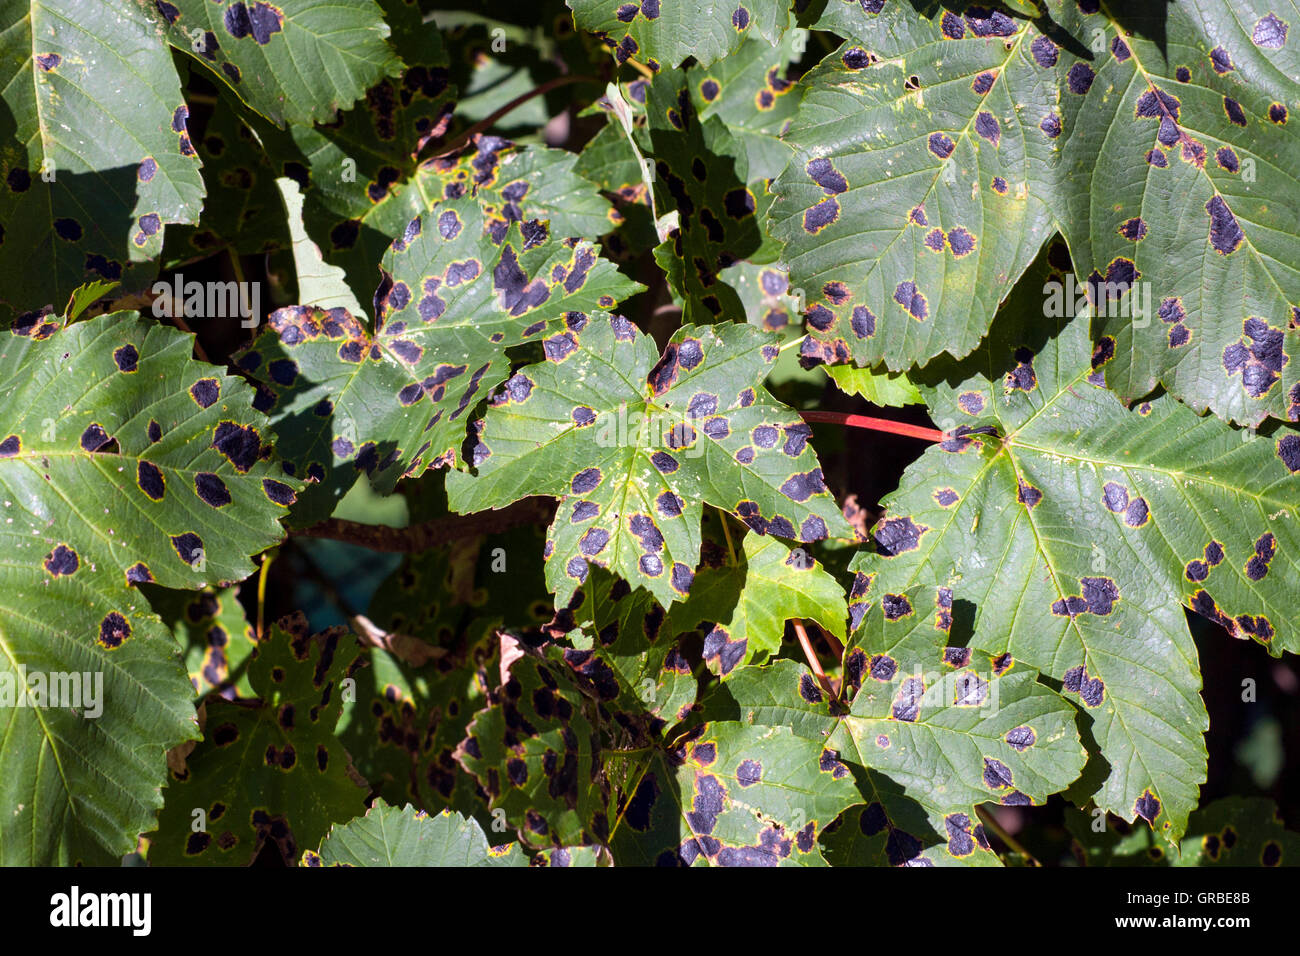 Tar Spot Disease on Maple Leaf Stock Photo